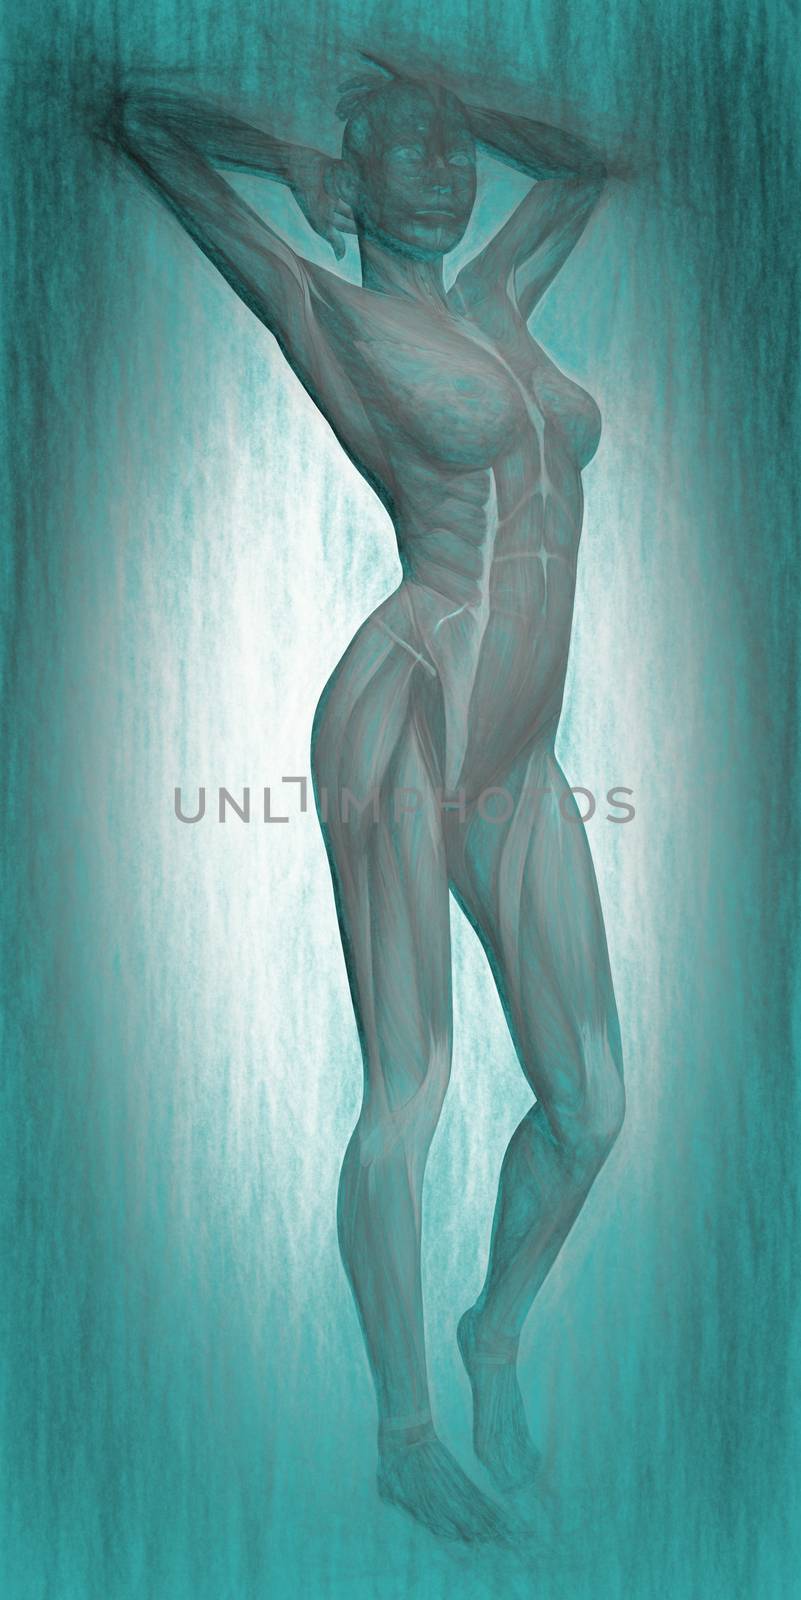 3d illustration of human body anatomy
